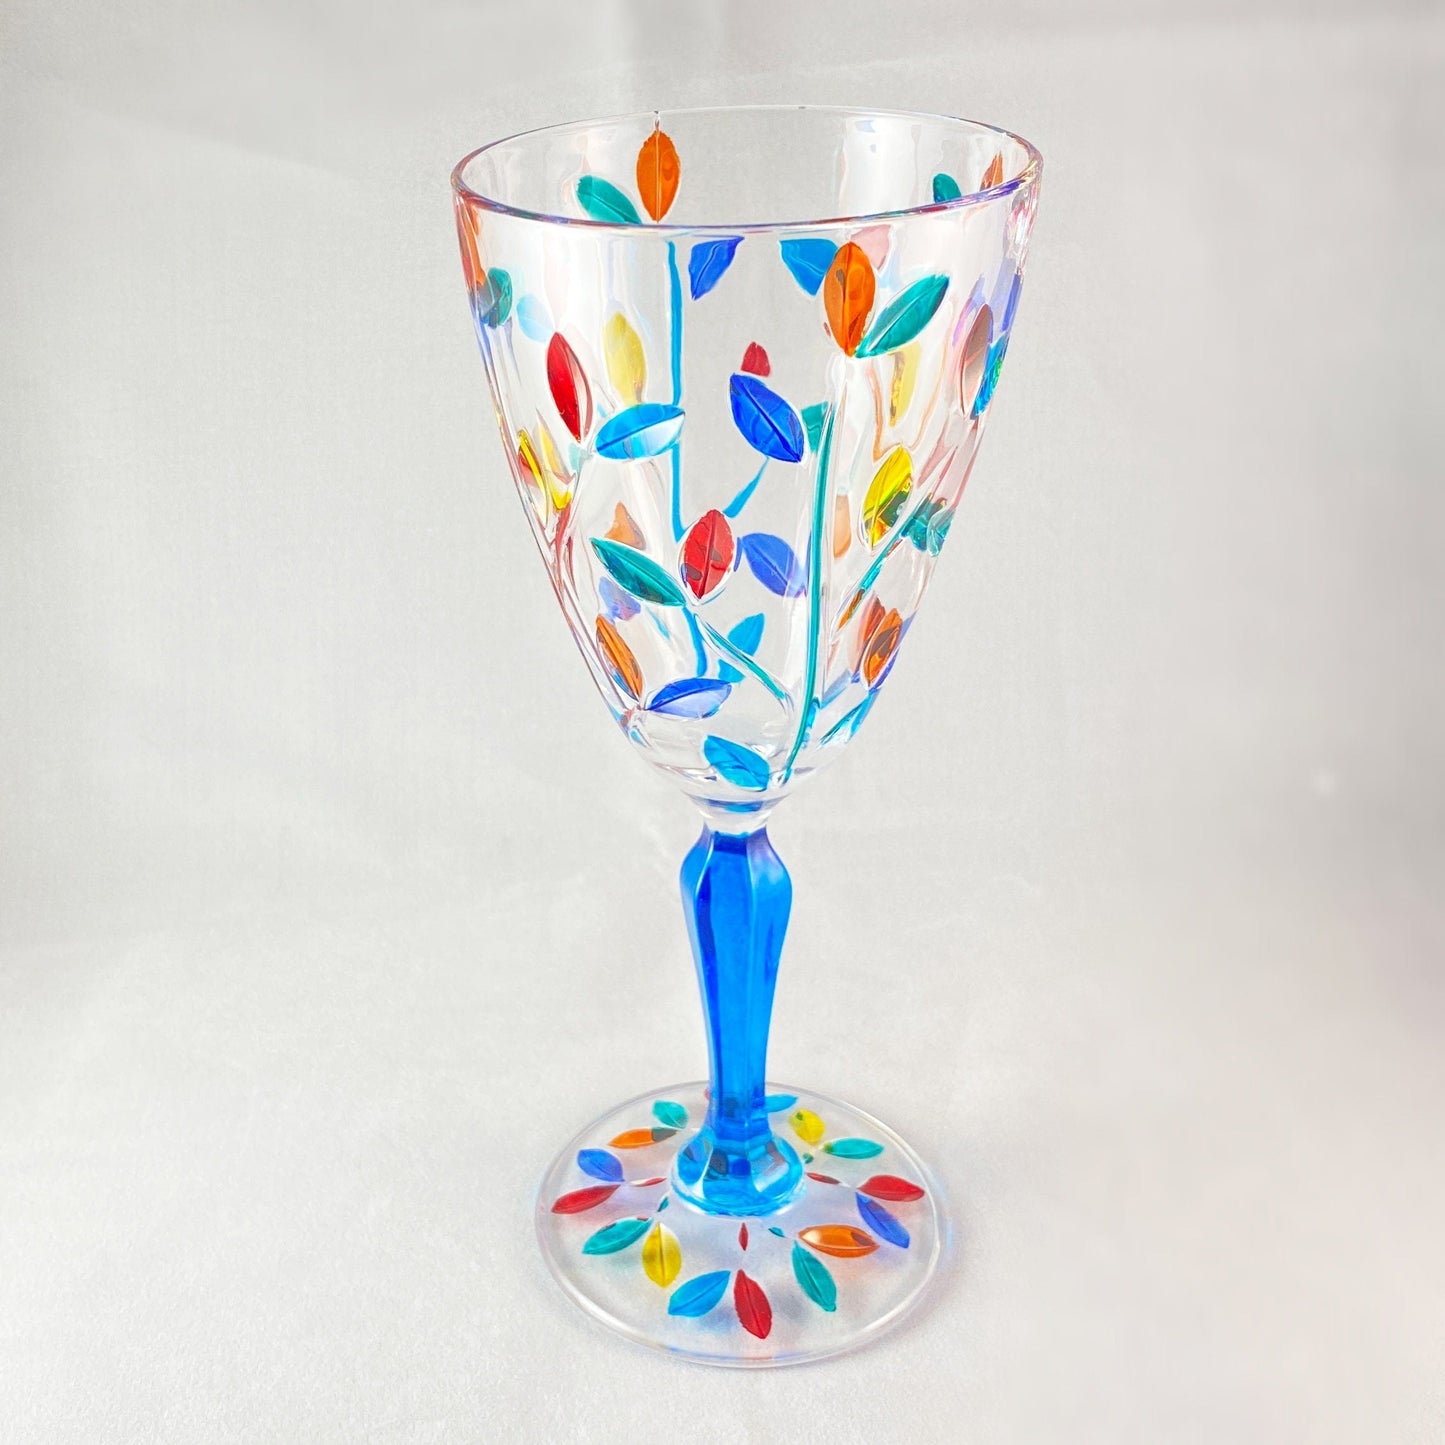 Blue Stem Tree of Life Venetian Glass Wine Glass - Handmade in Italy, Colorful Murano Glass